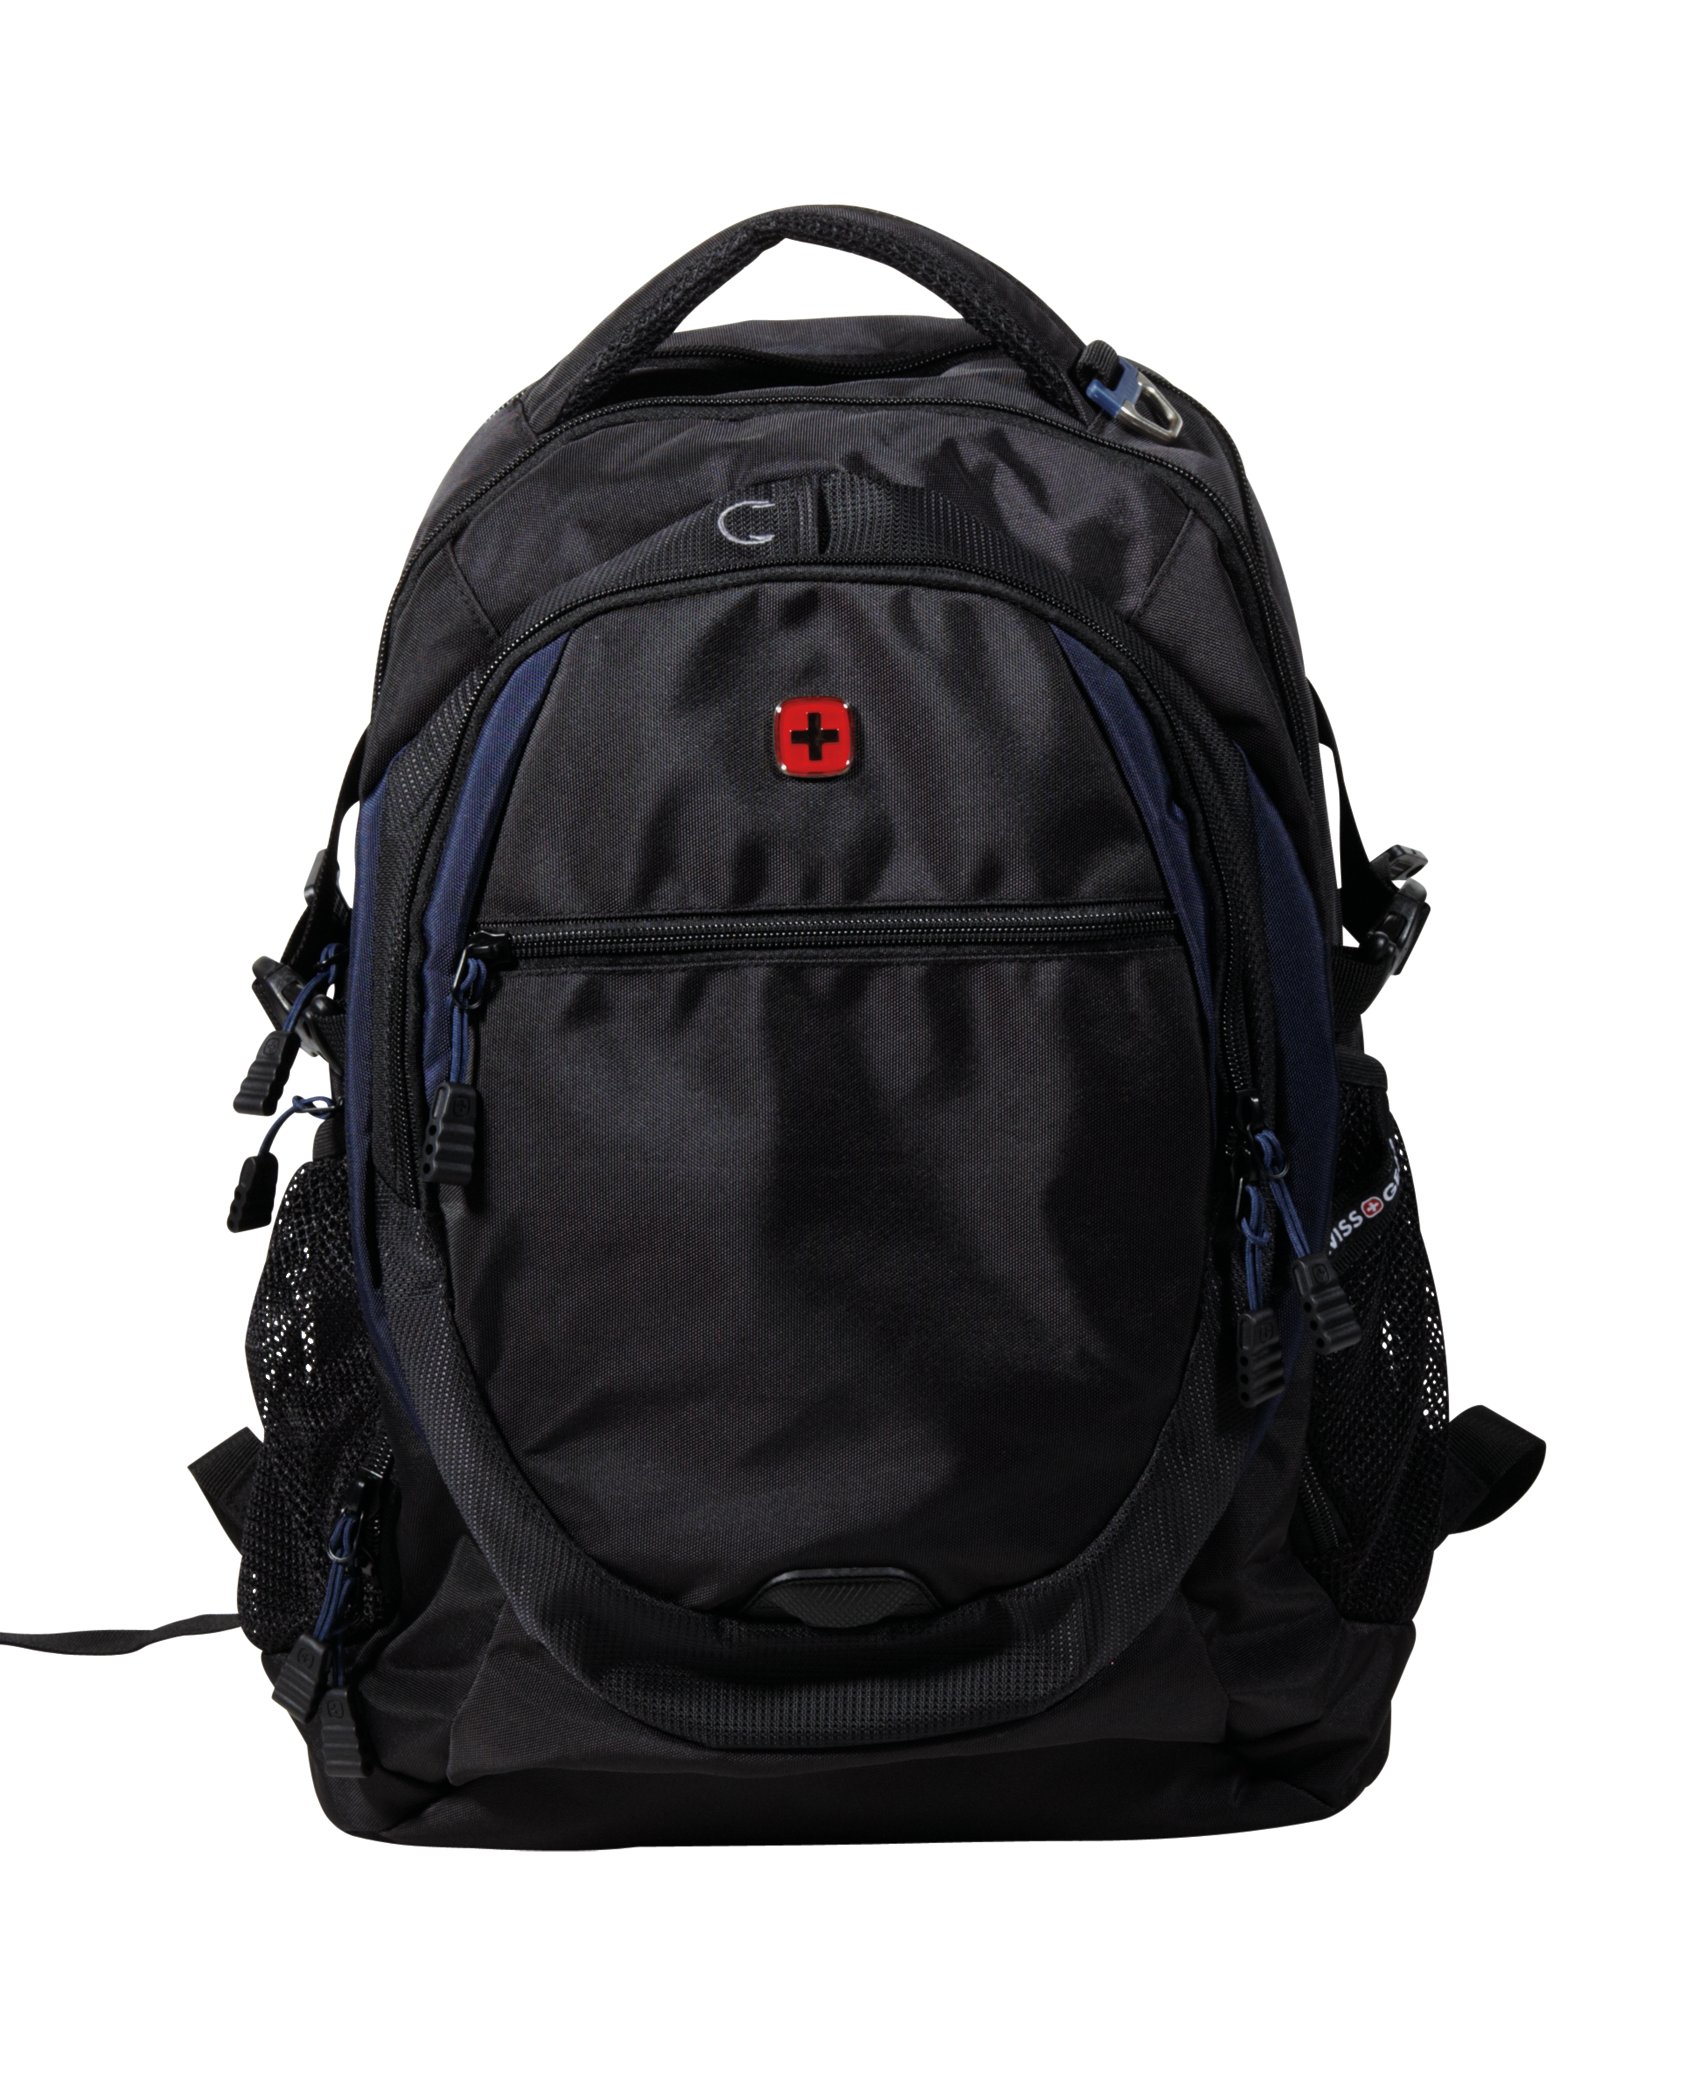 Swiss Gear Black & Navy Backpack - Shop Backpacks at H-E-B